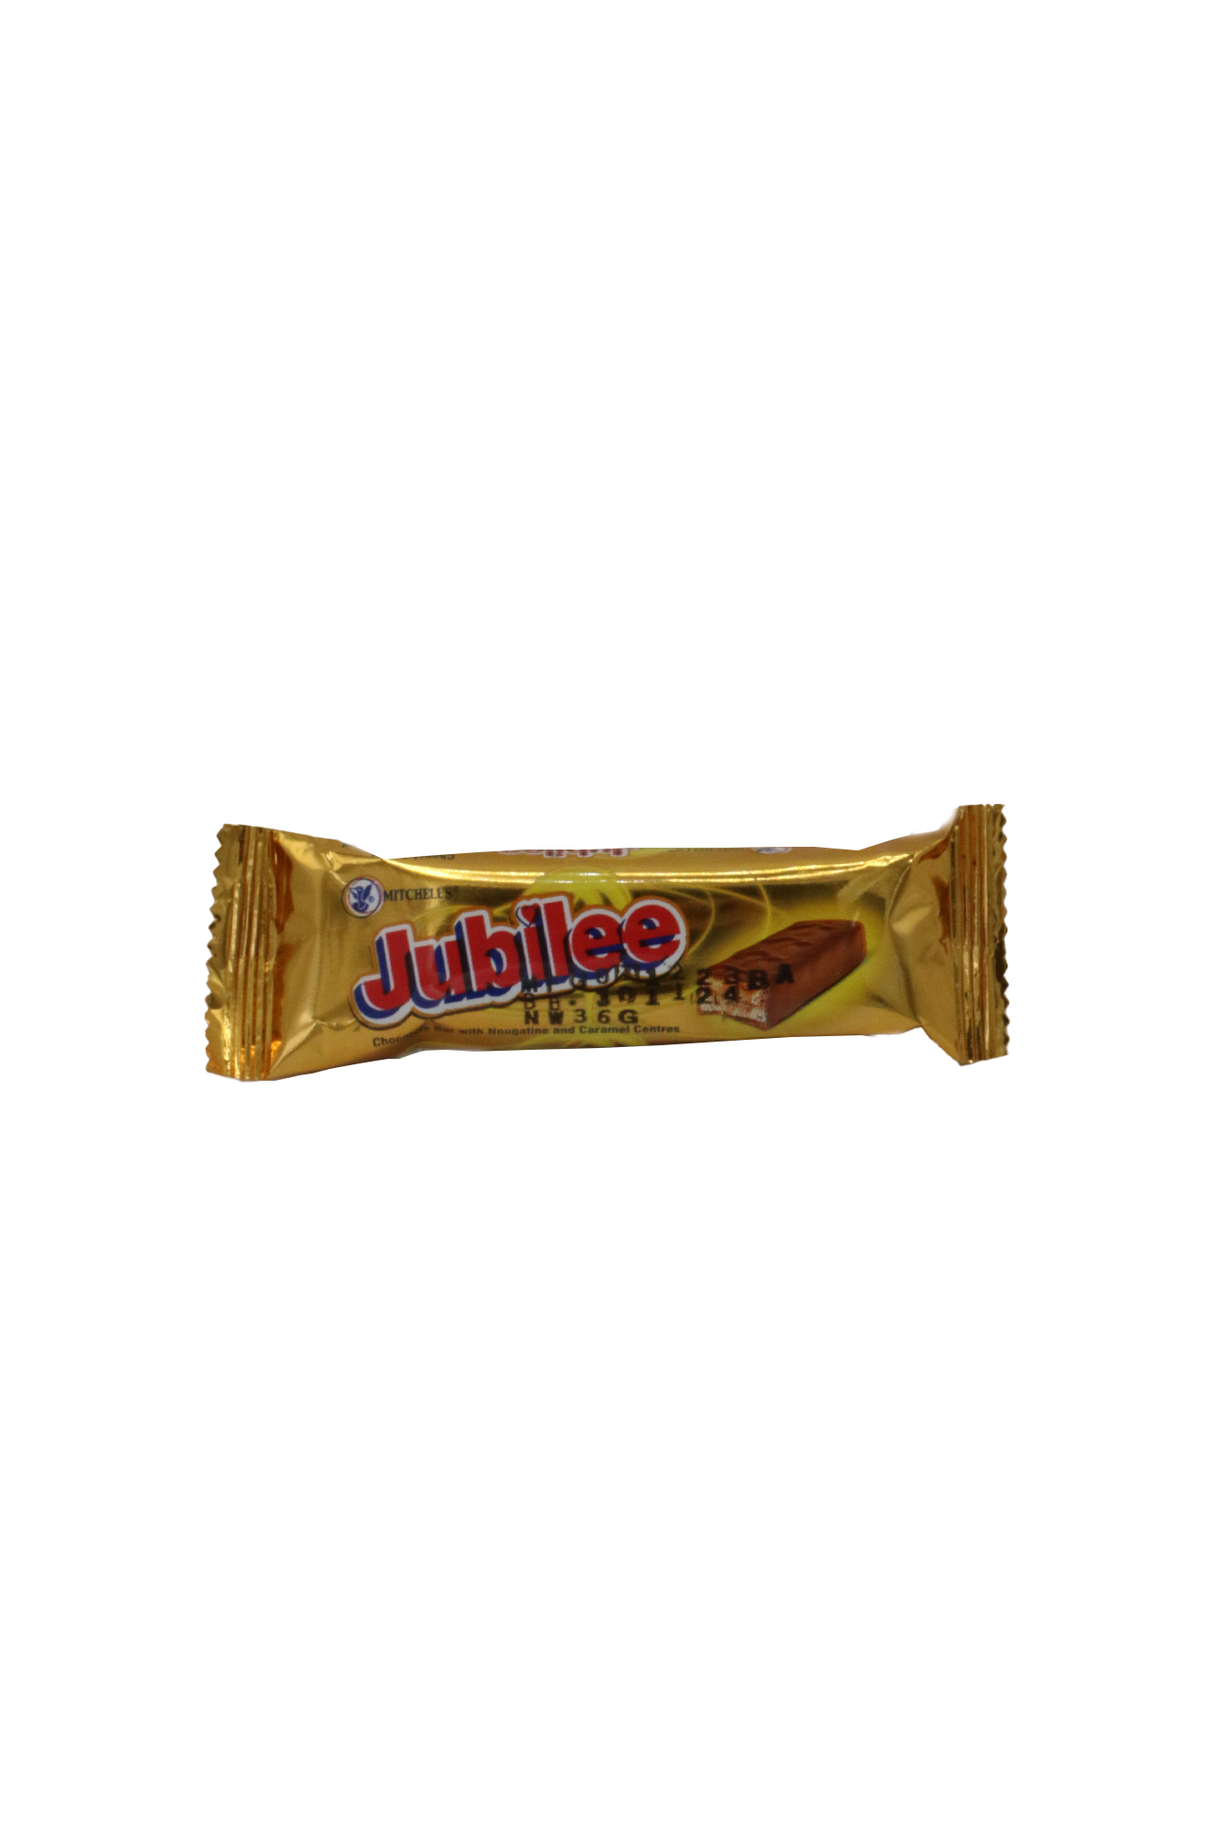 mitchells jubilee chocolate 40rs